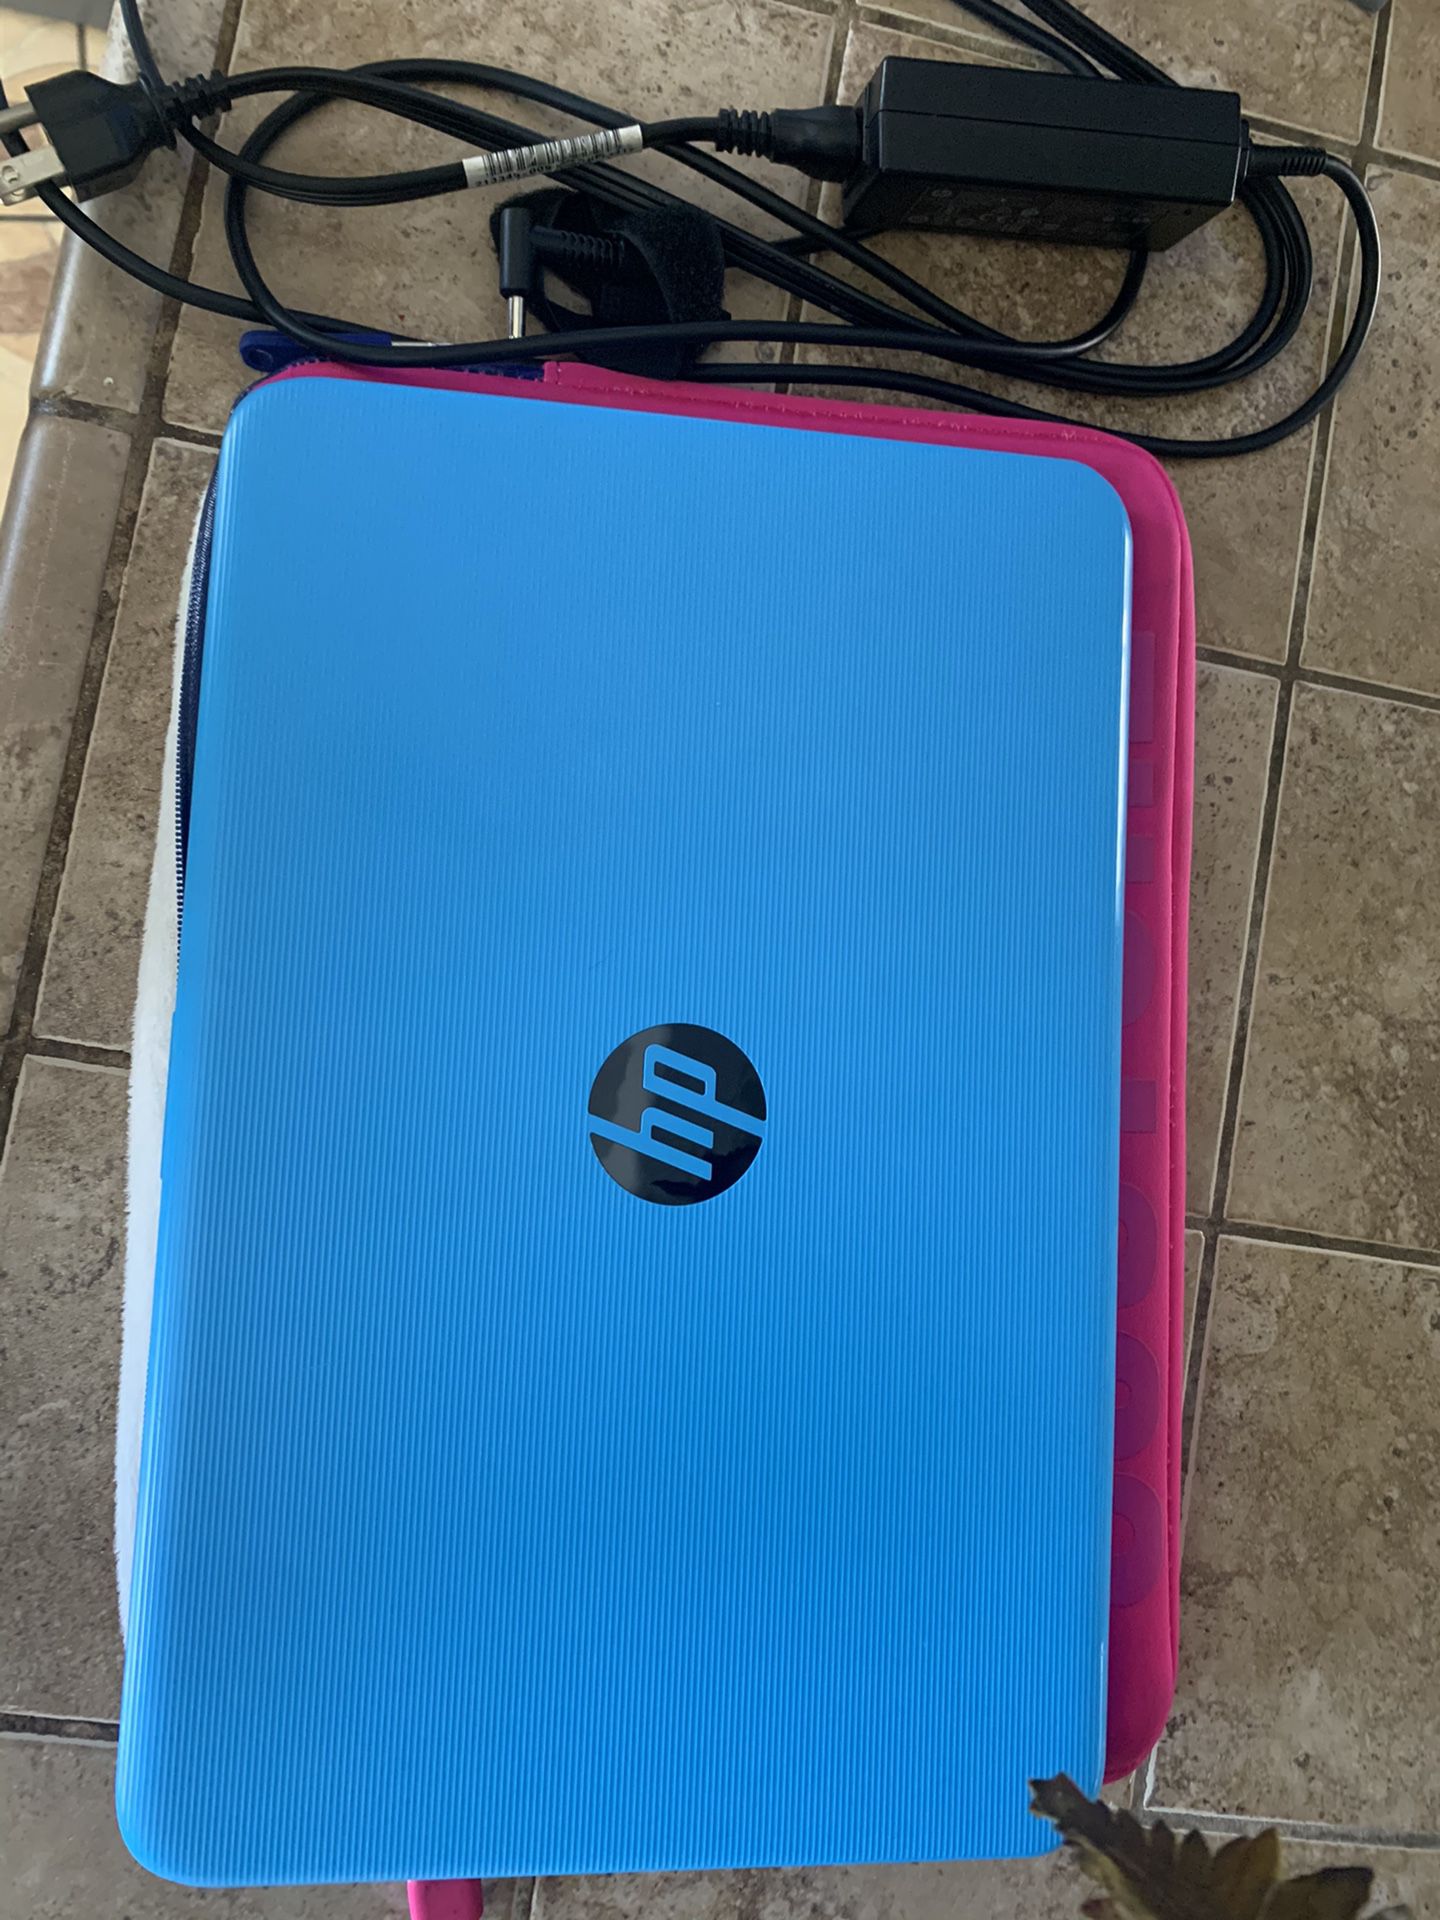 Blue hp laptop